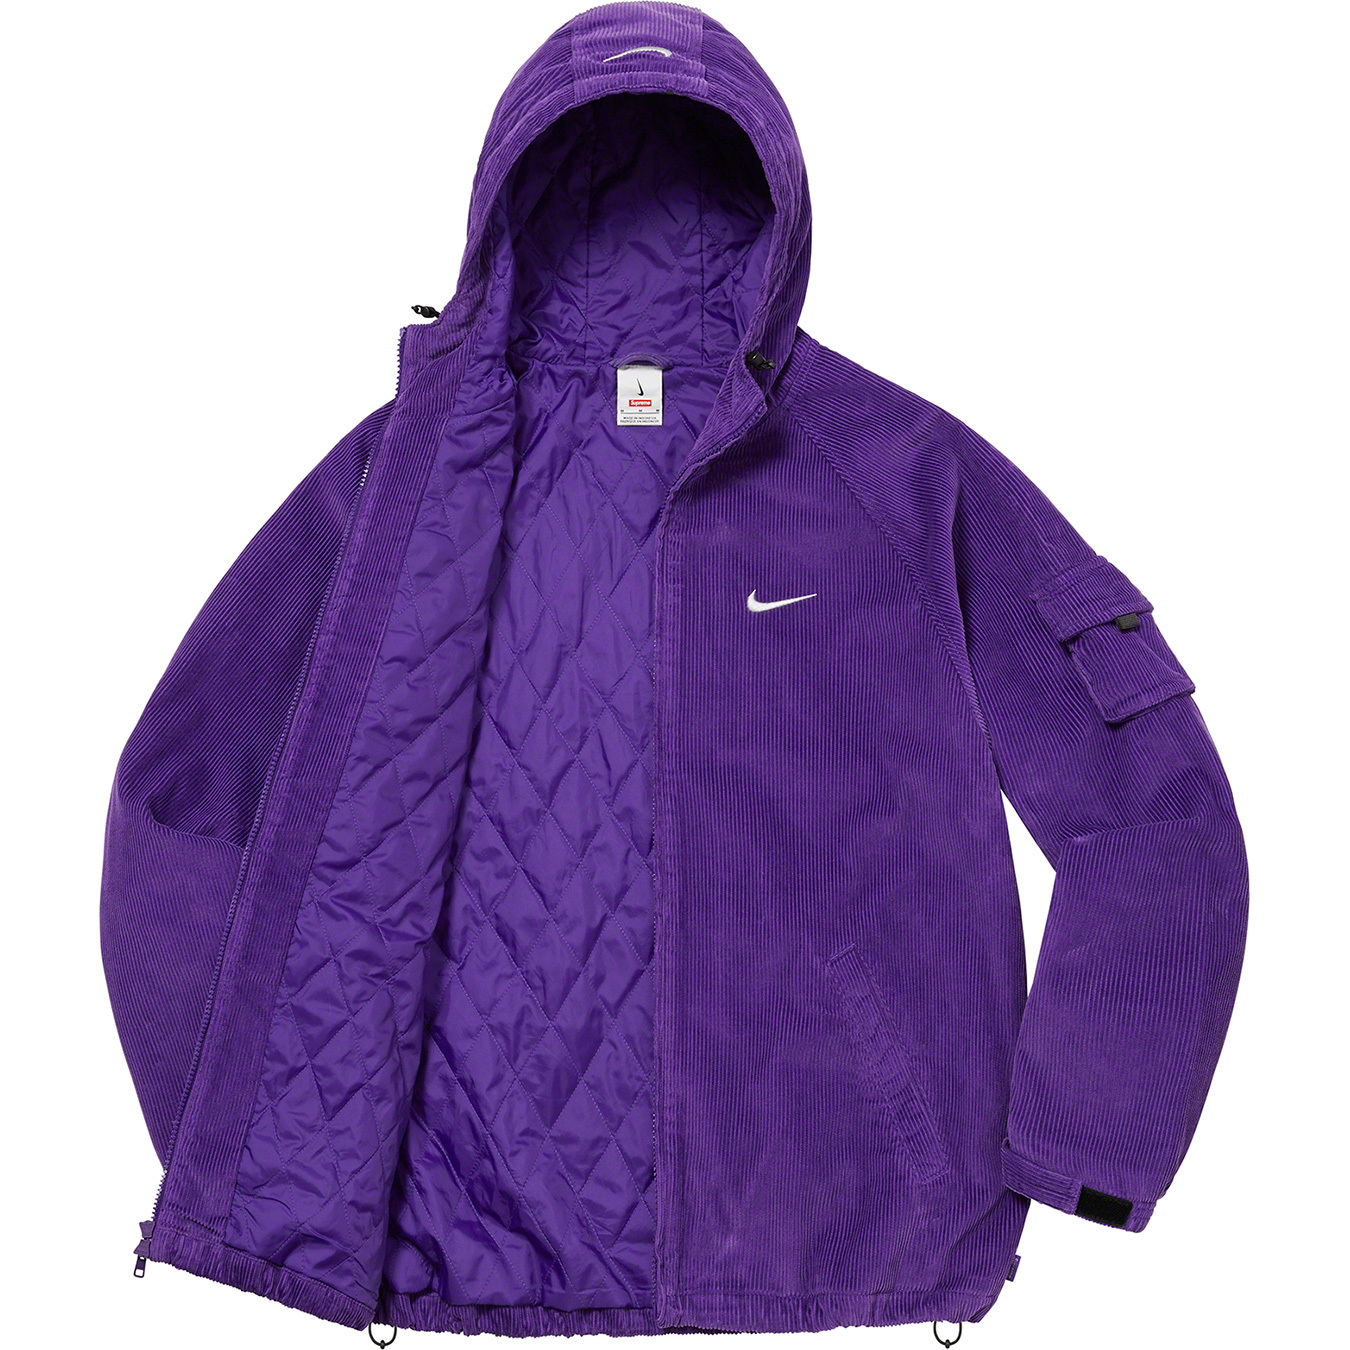 Supreme®/Nike® Arc Corduroy Hooded Jacket - Supreme Community